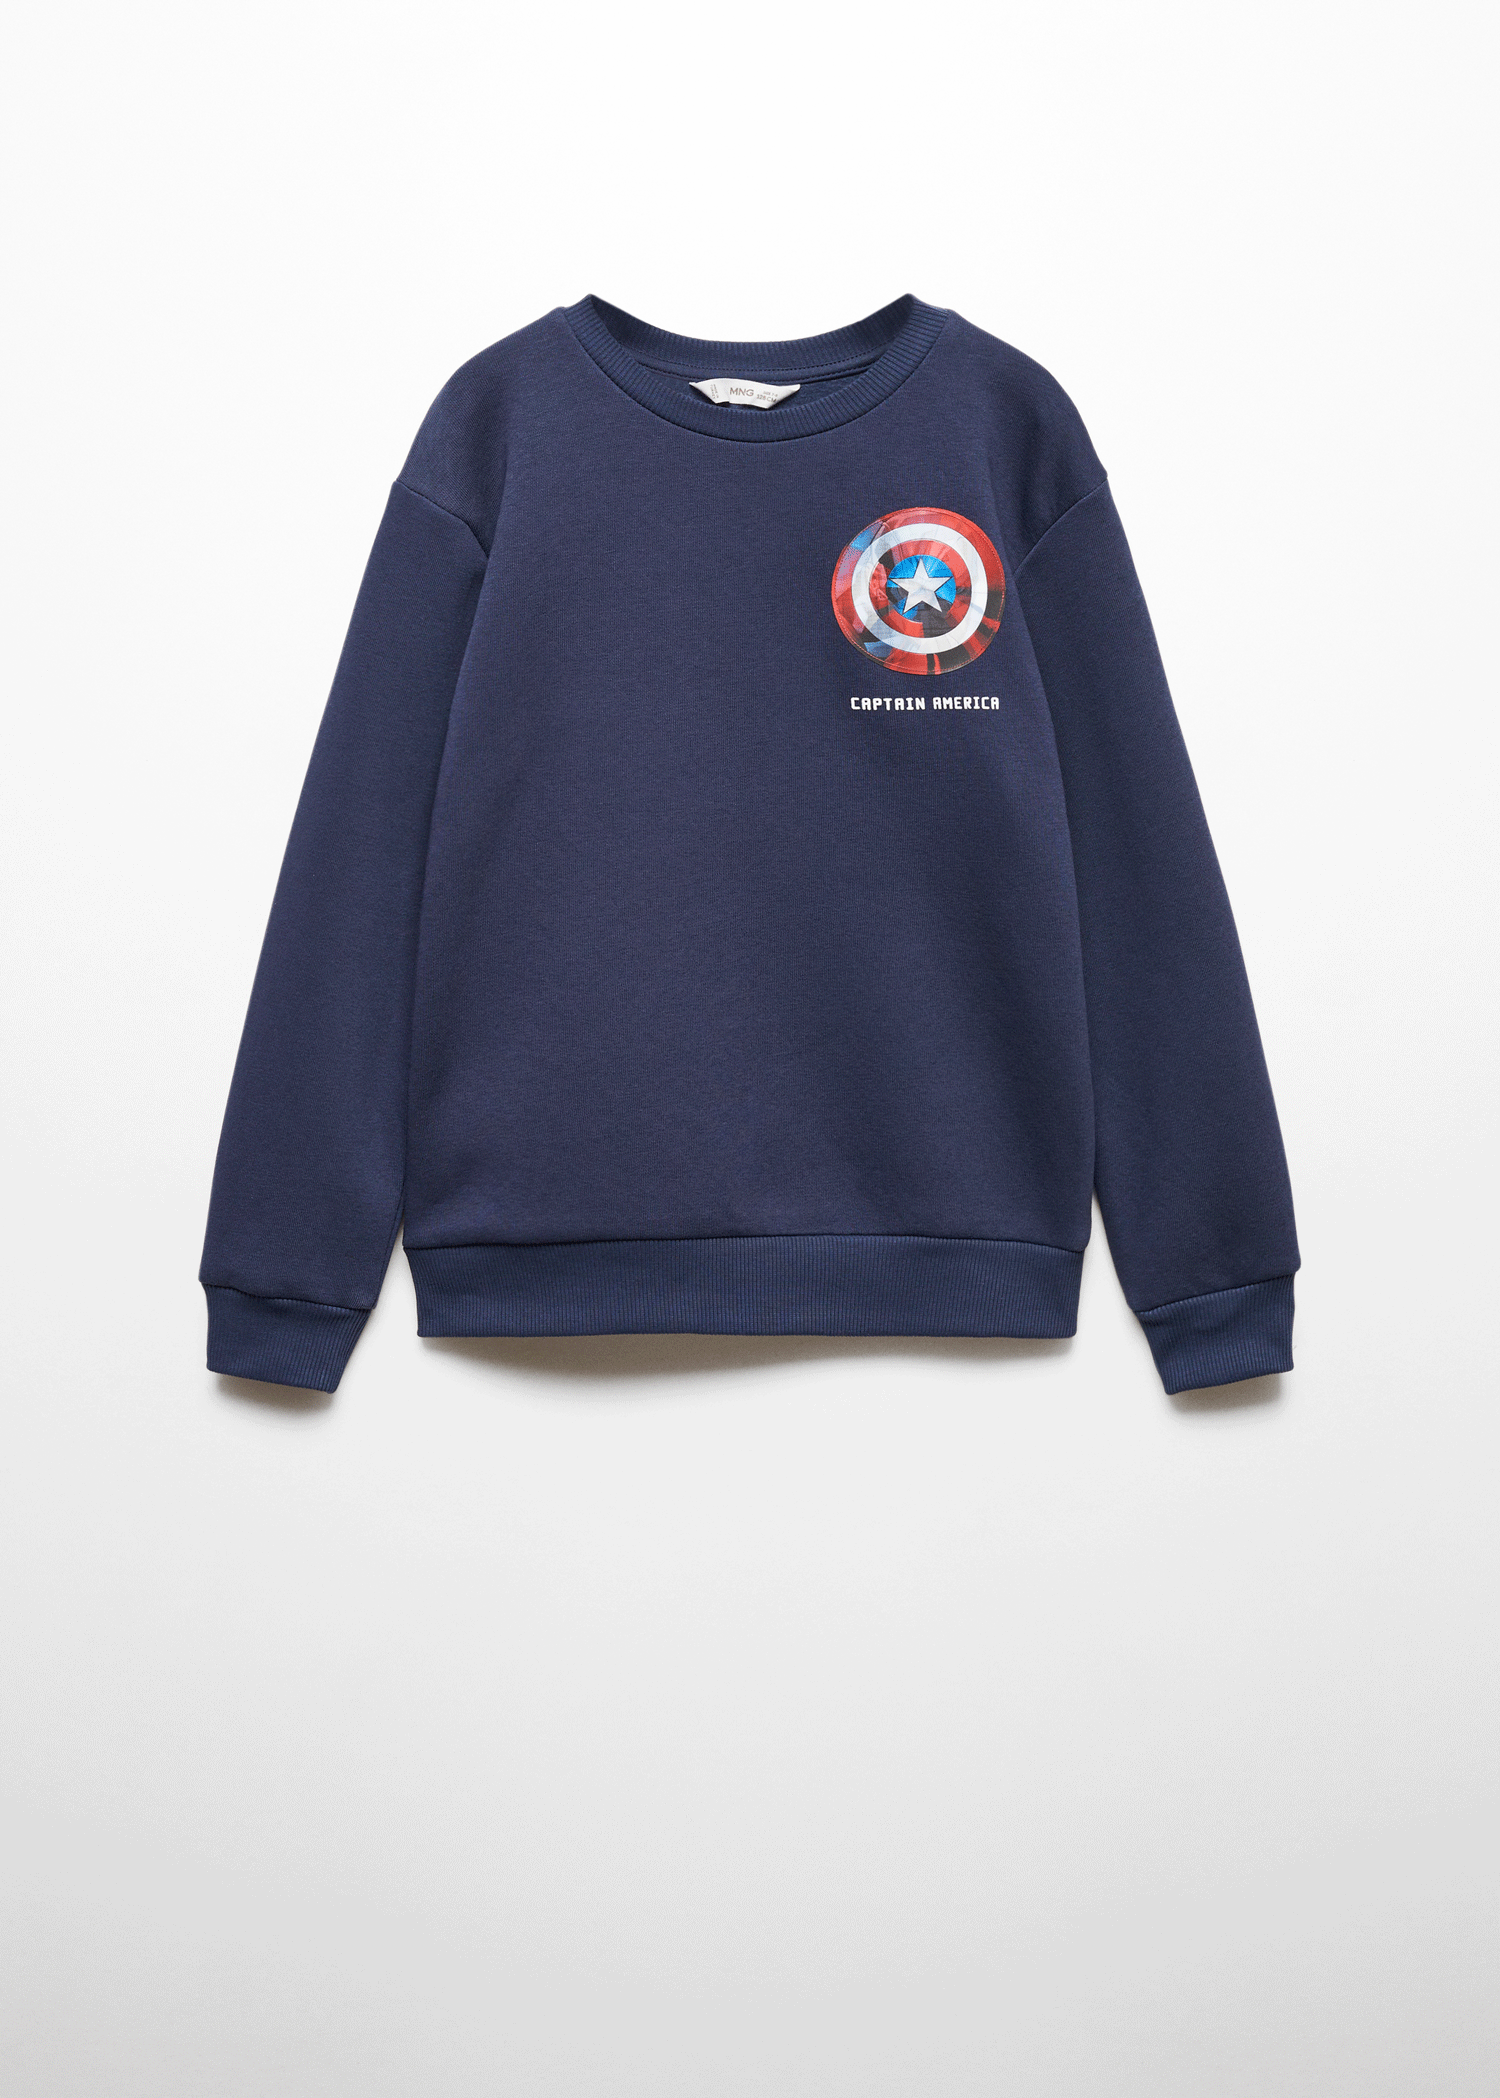 Captain America Sweatshirt - Details of the article 9